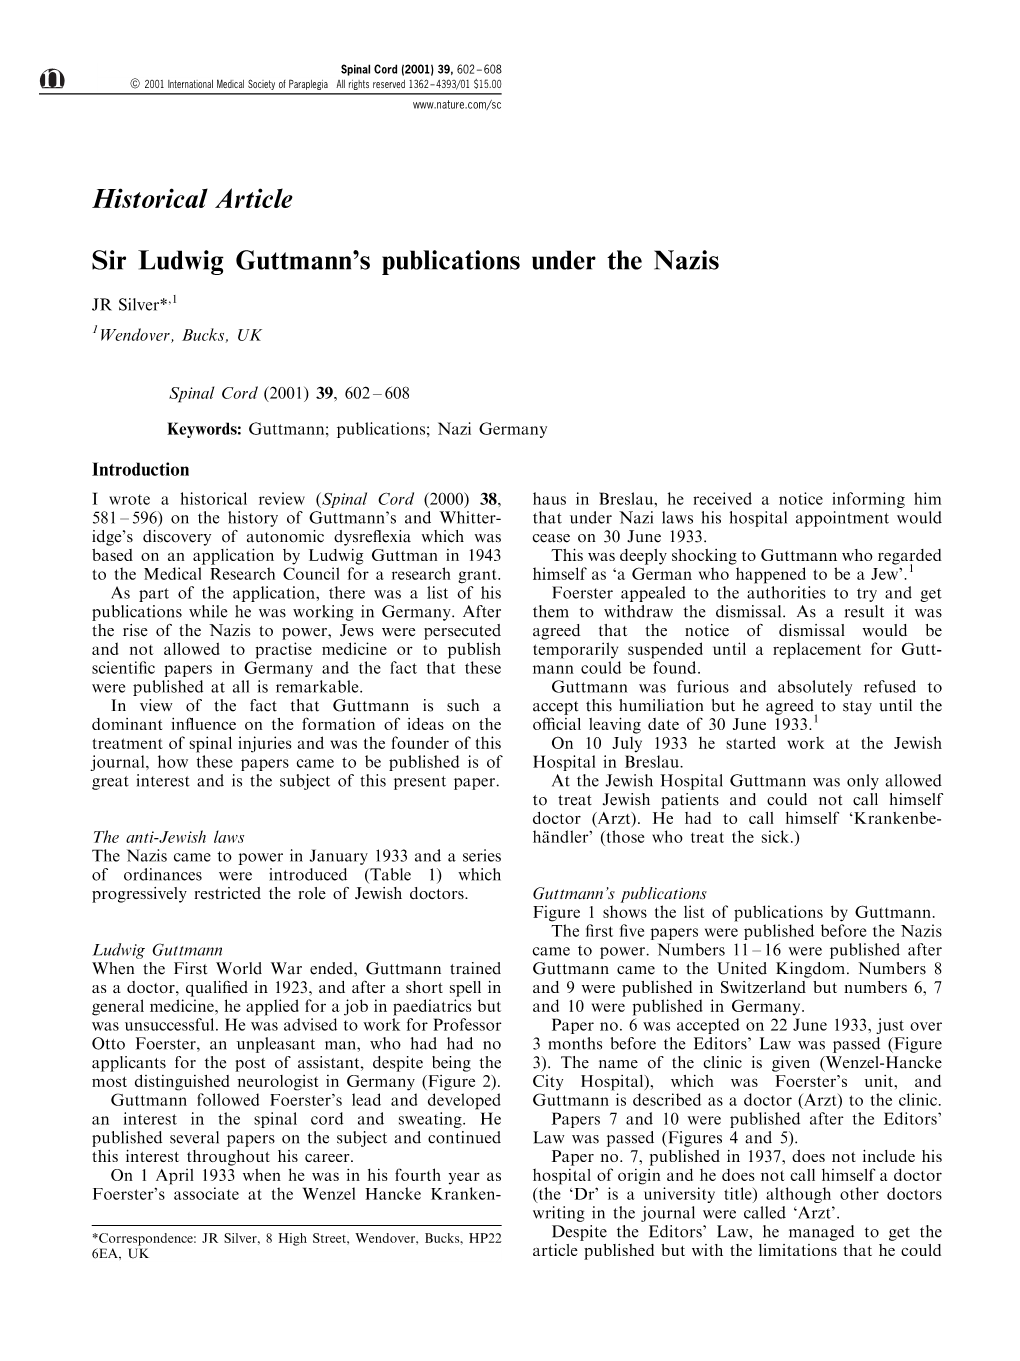 Historical Article Sir Ludwig Guttmann's Publications Under the Nazis